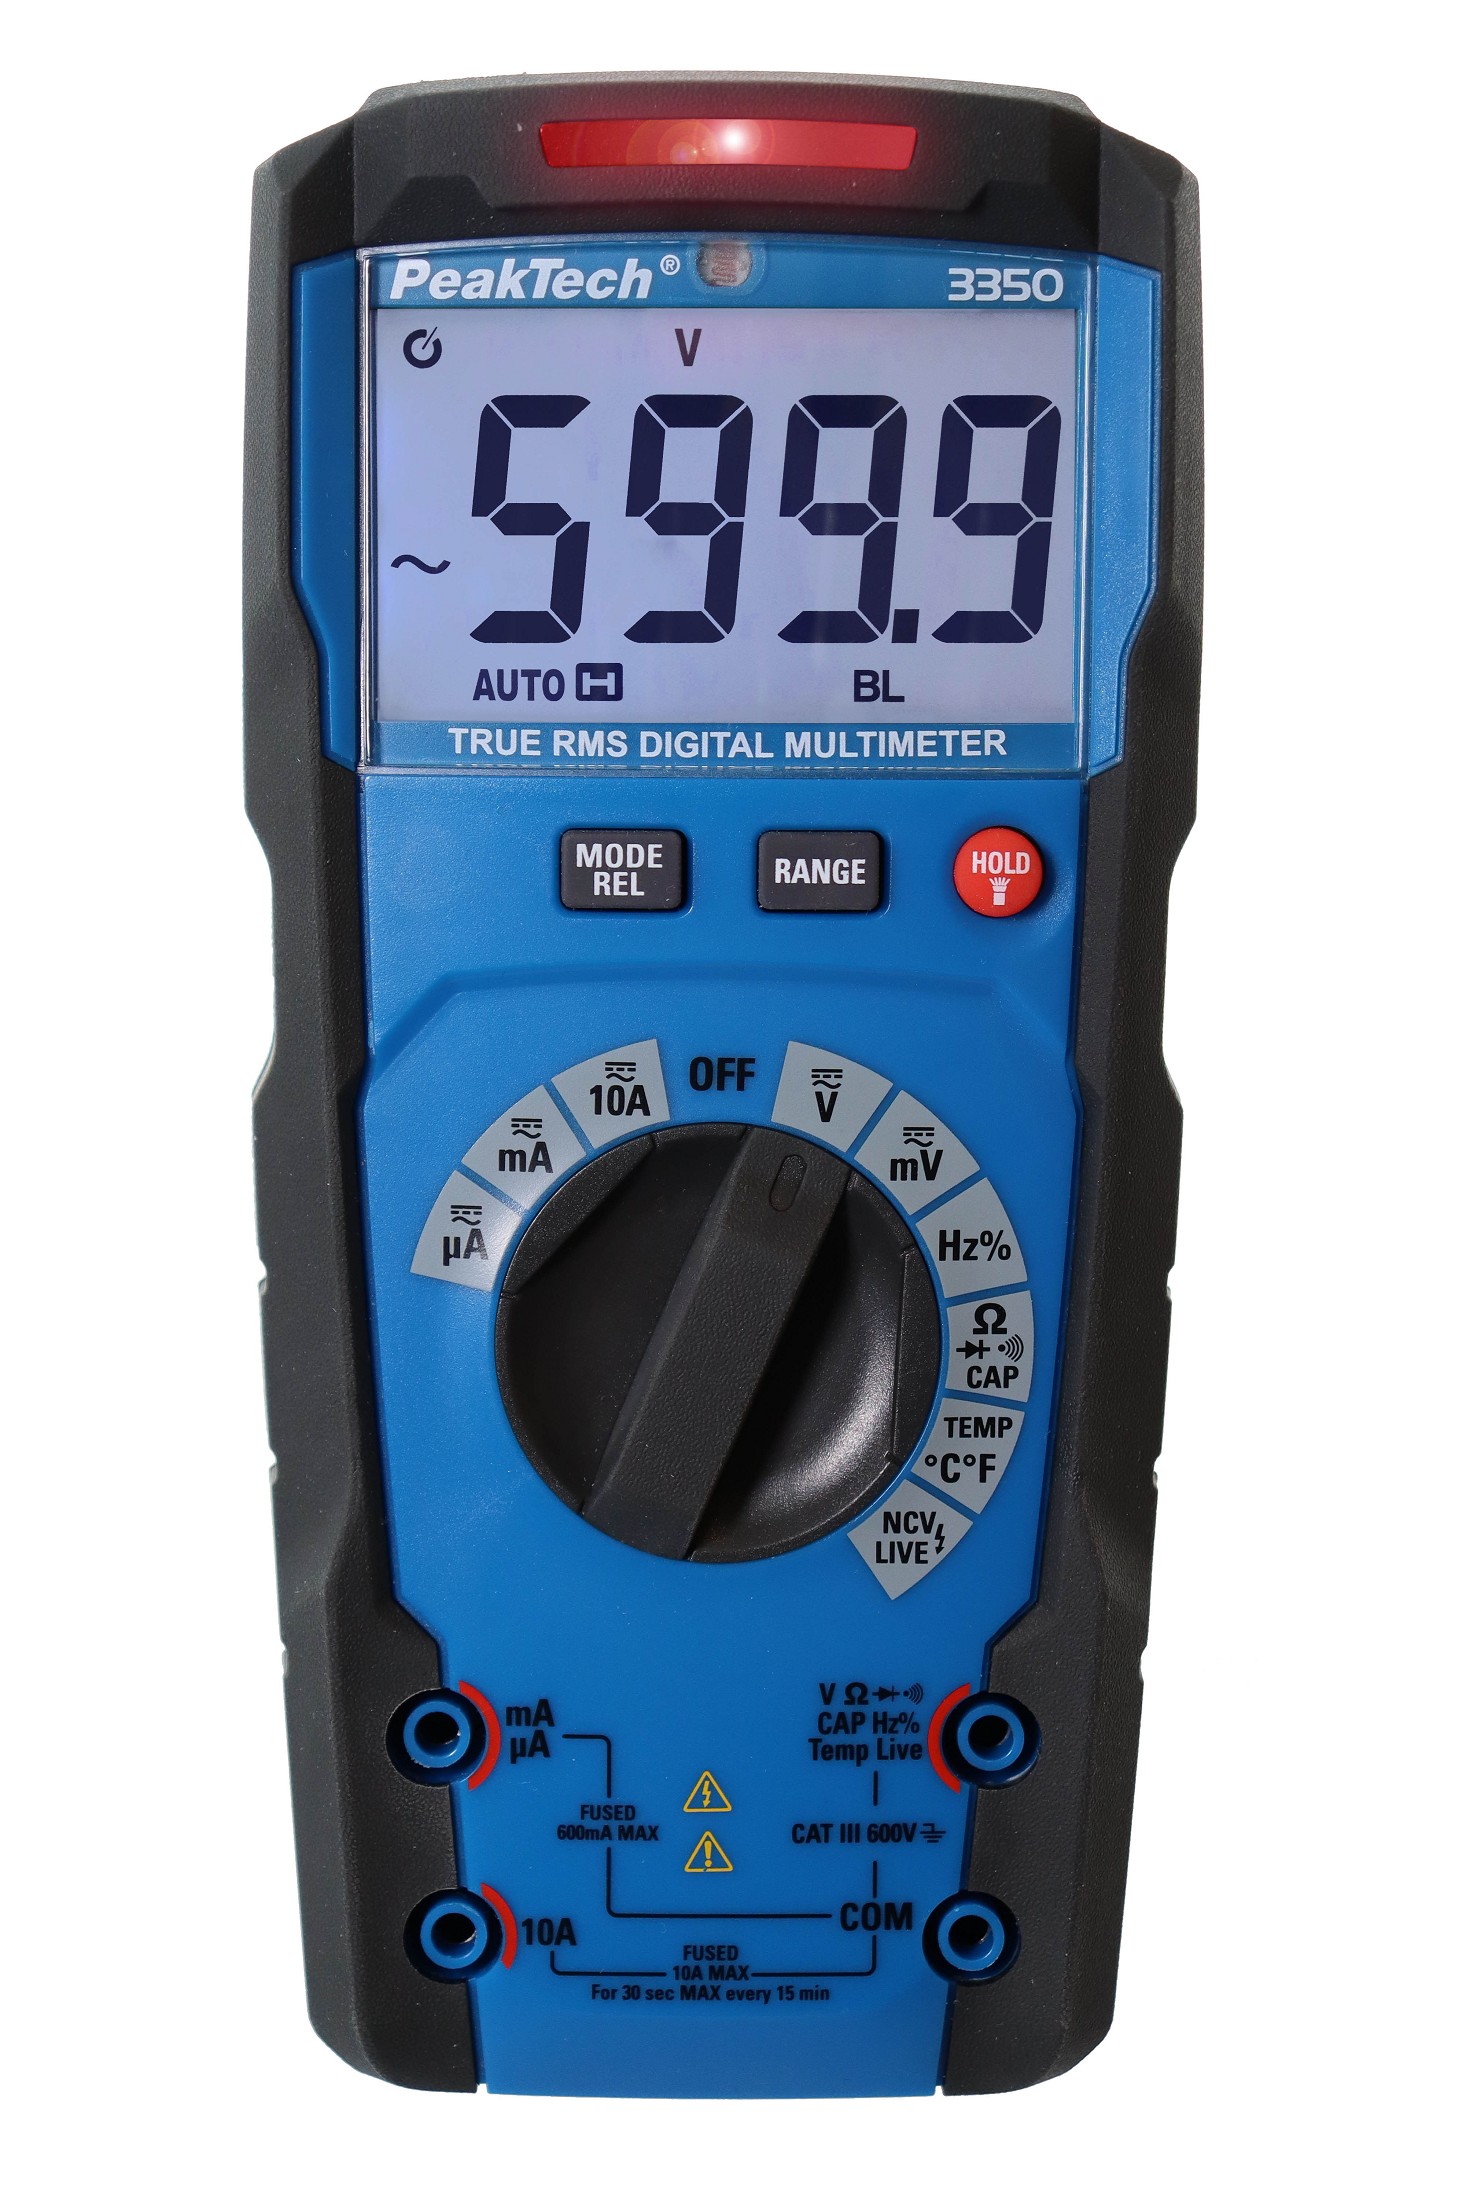 «PeakTech® P 3350» TrueRMS digital multimeter 6000 Counts, Auto Range